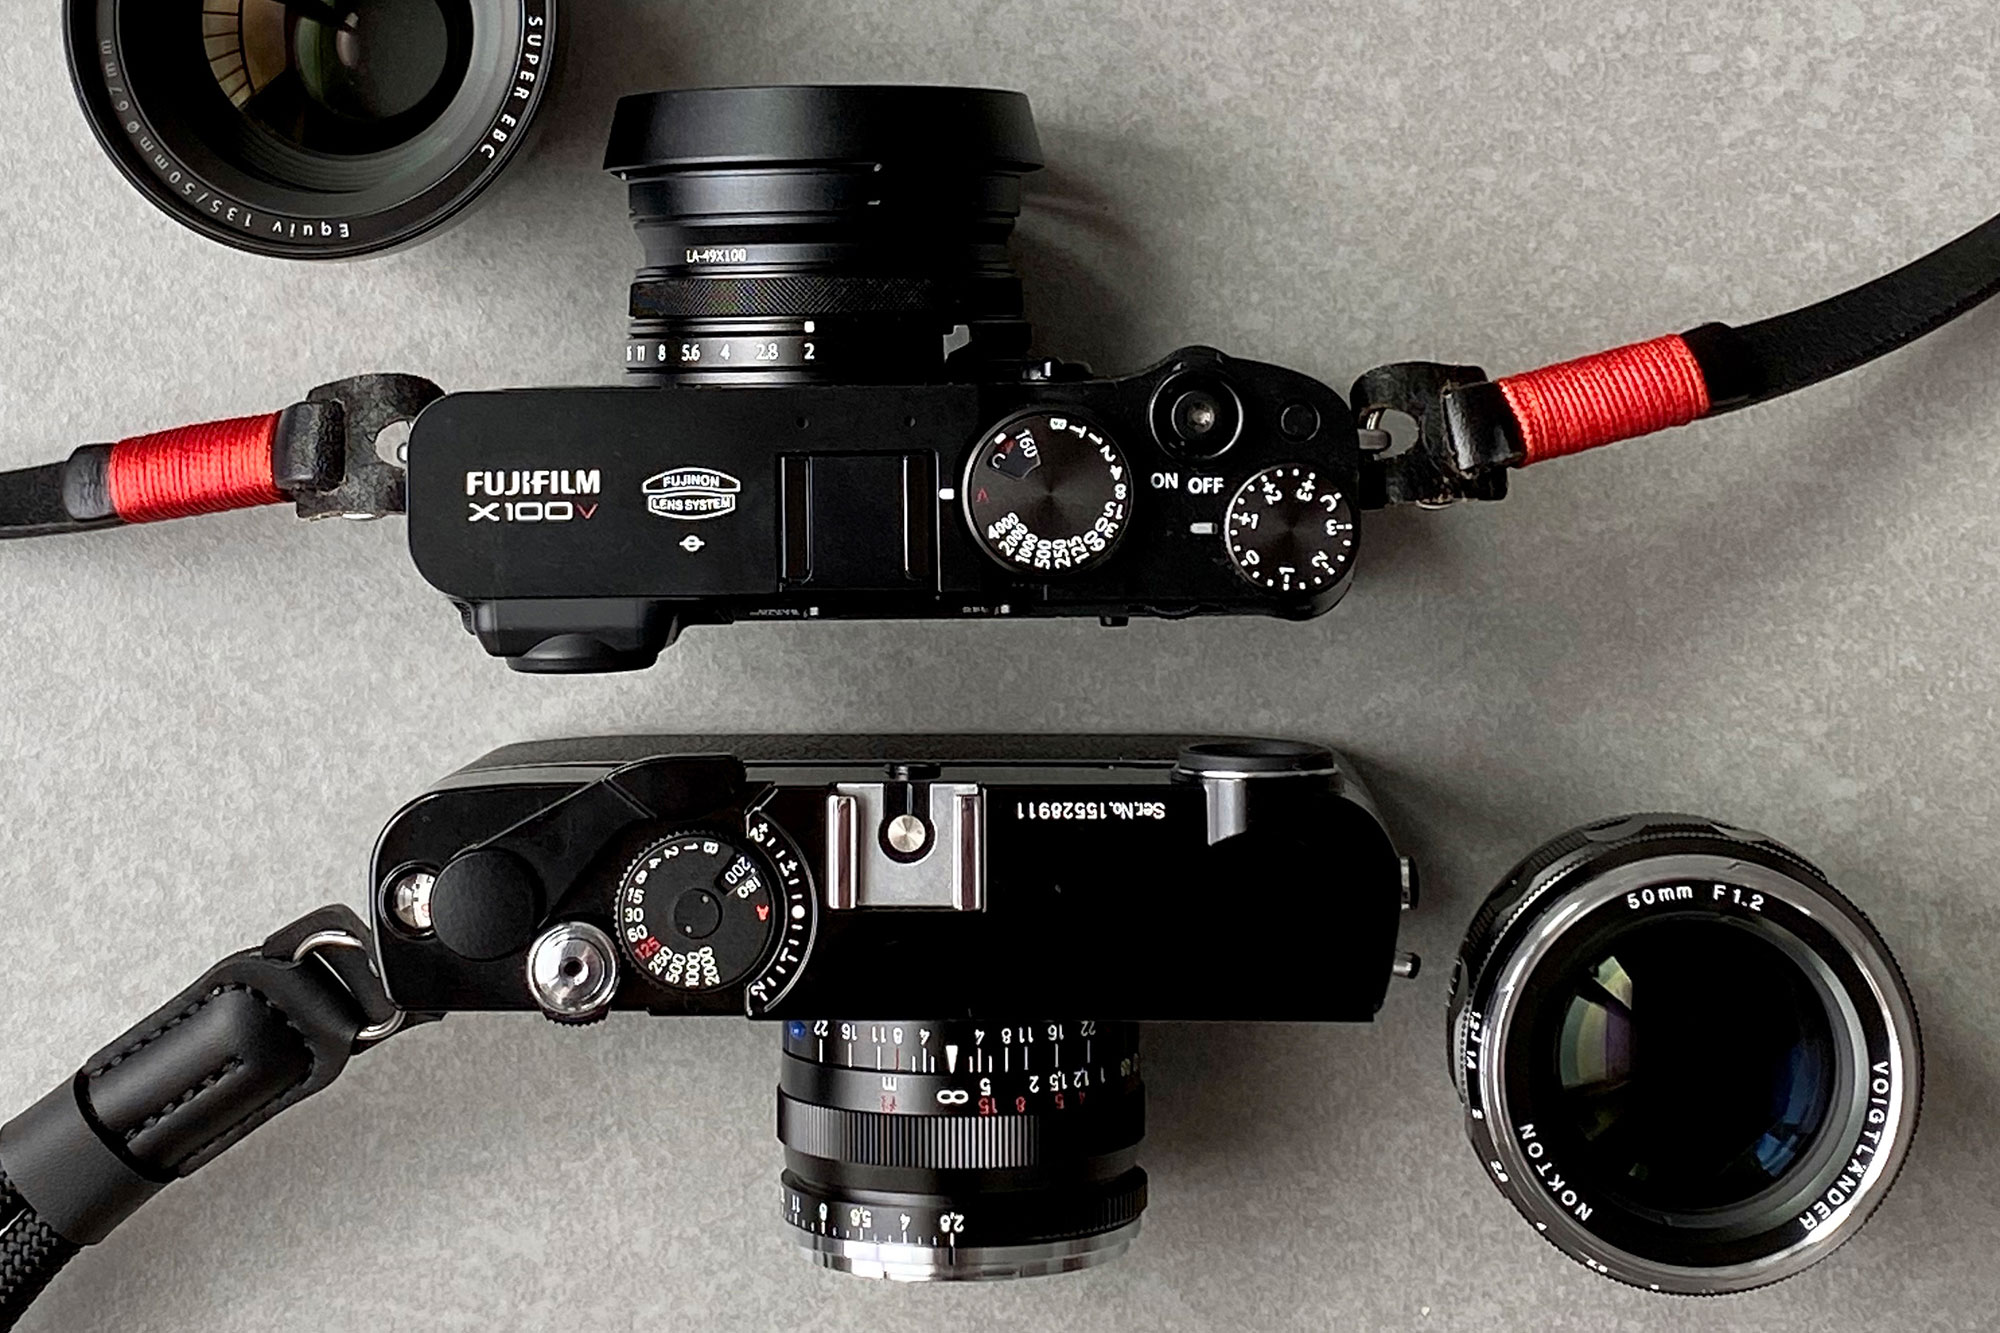 Premium/ Fujifilm – From Fuji to film photography